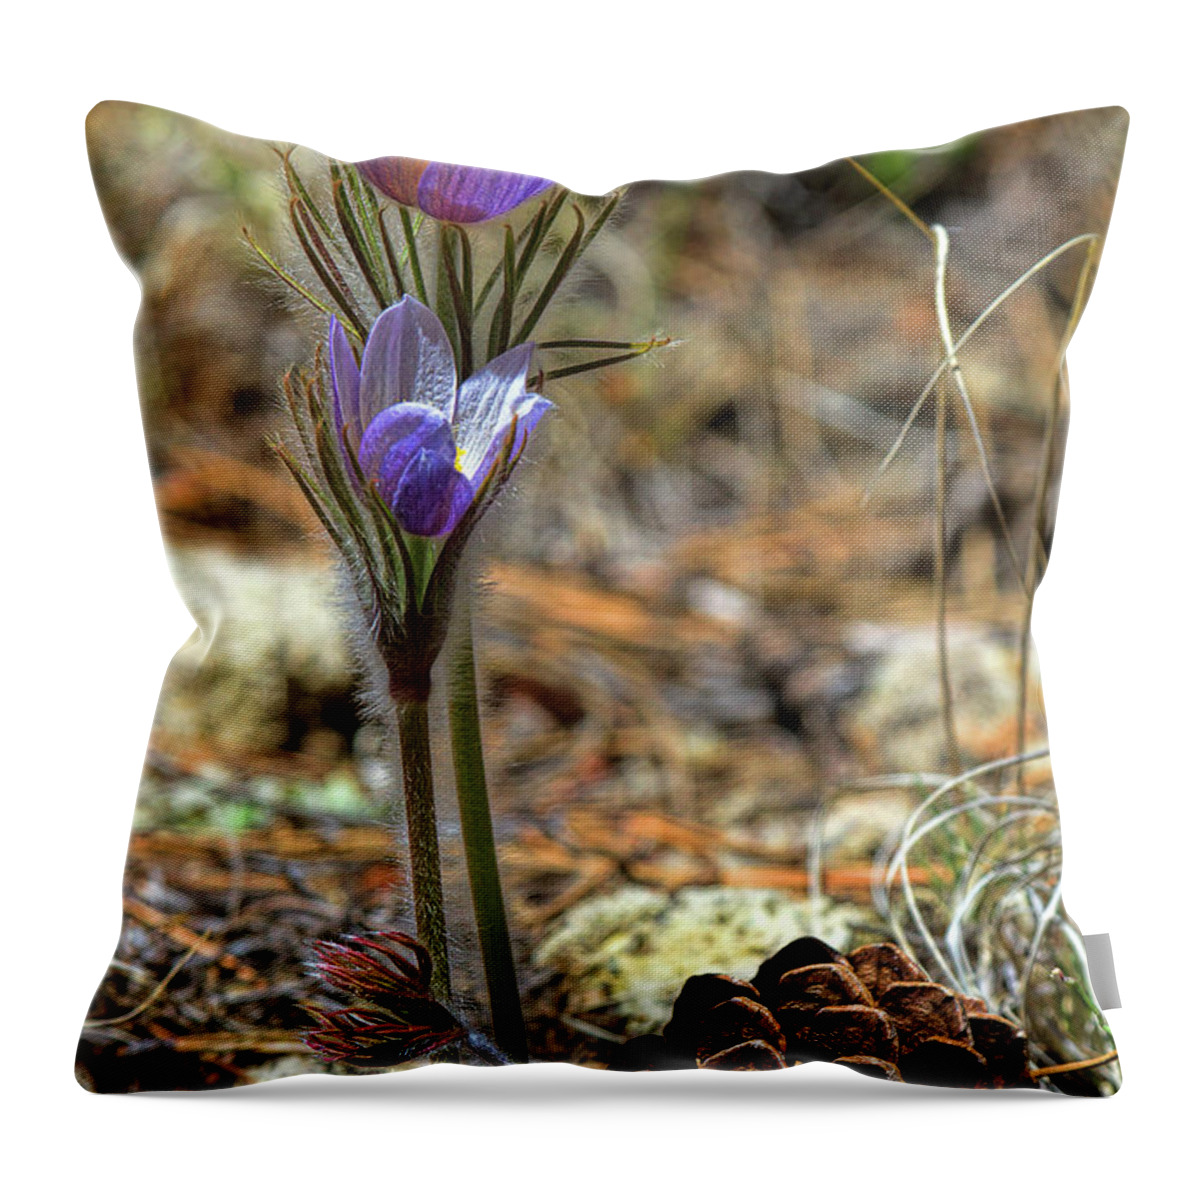 Pasque Flower Throw Pillow featuring the photograph Prairie Crocus by Jim Garrison